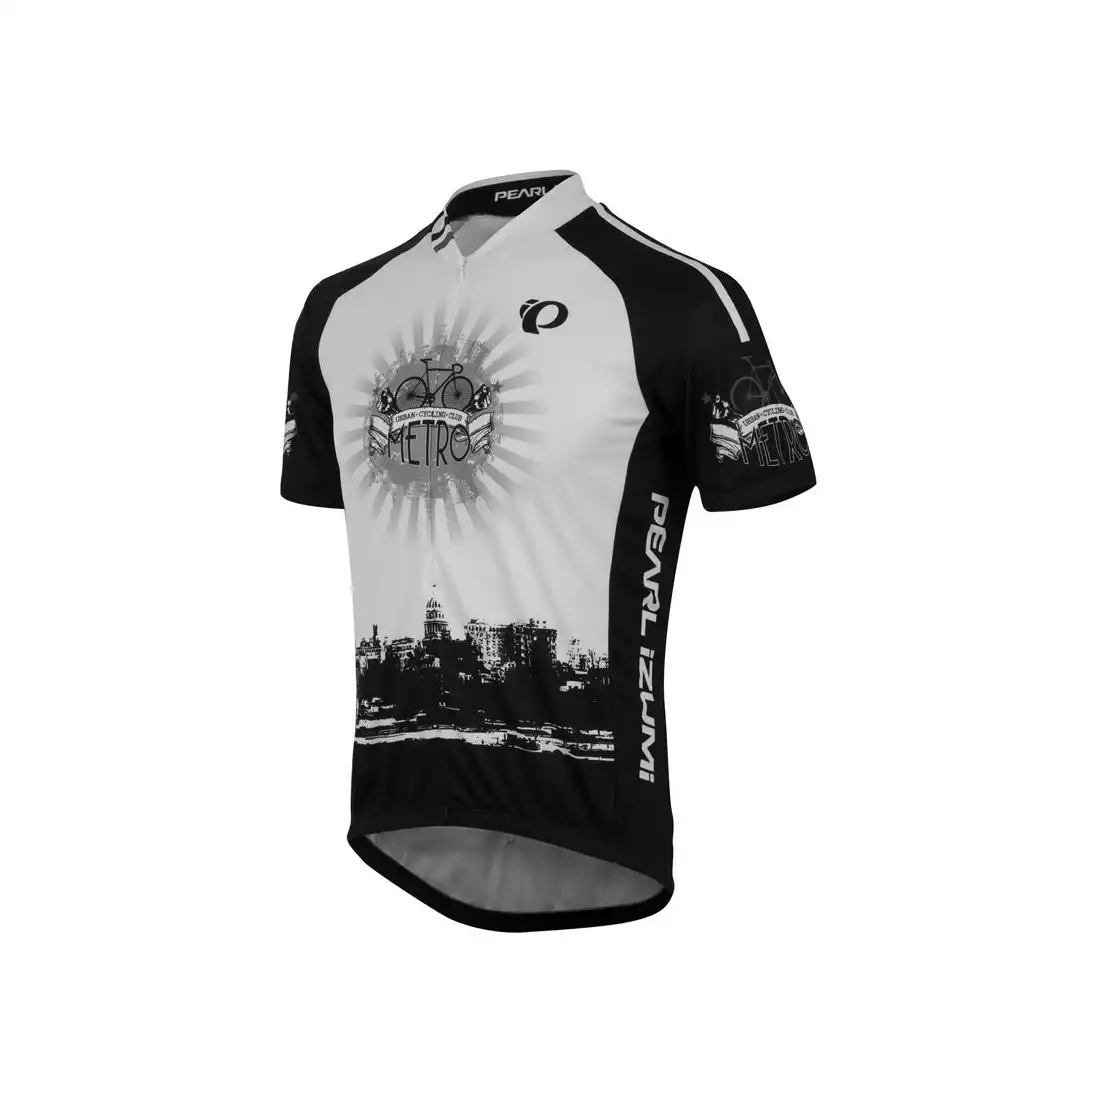 PEARL IZUMI - 0705-4IY SELECT LTD - męska koszulka rowerowa, kolor: Biało-czarny